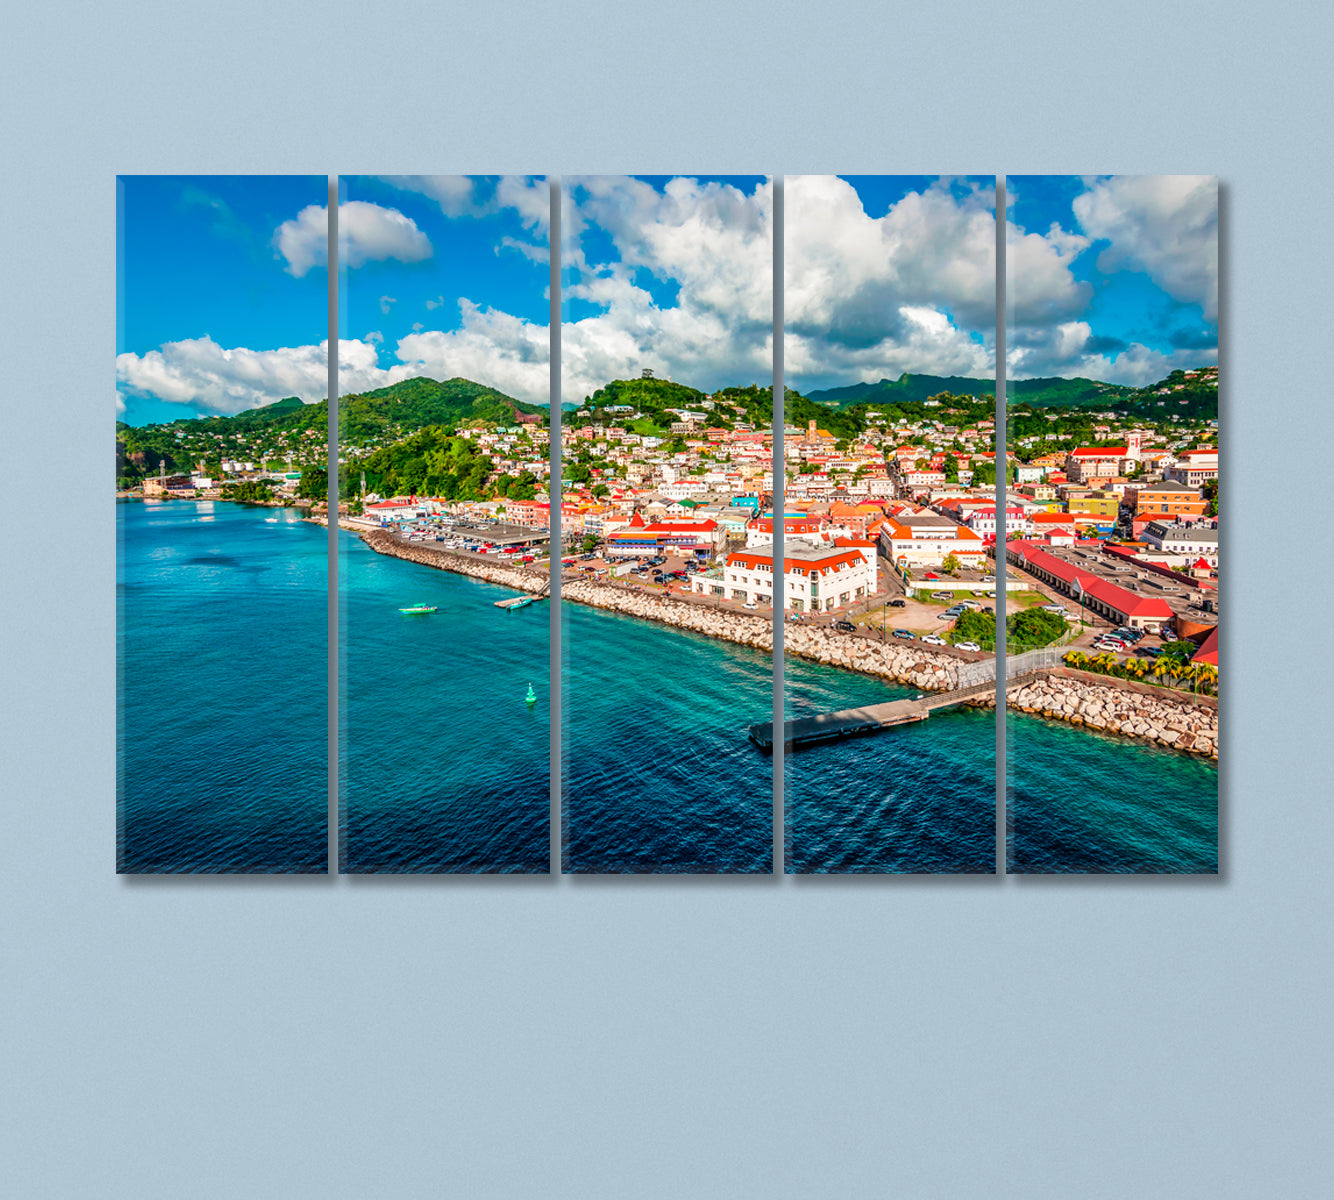 Coastal City Saint George's Grenada Caribbean Islands Canvas Print-Canvas Print-CetArt-5 Panels-36x24 inches-CetArt